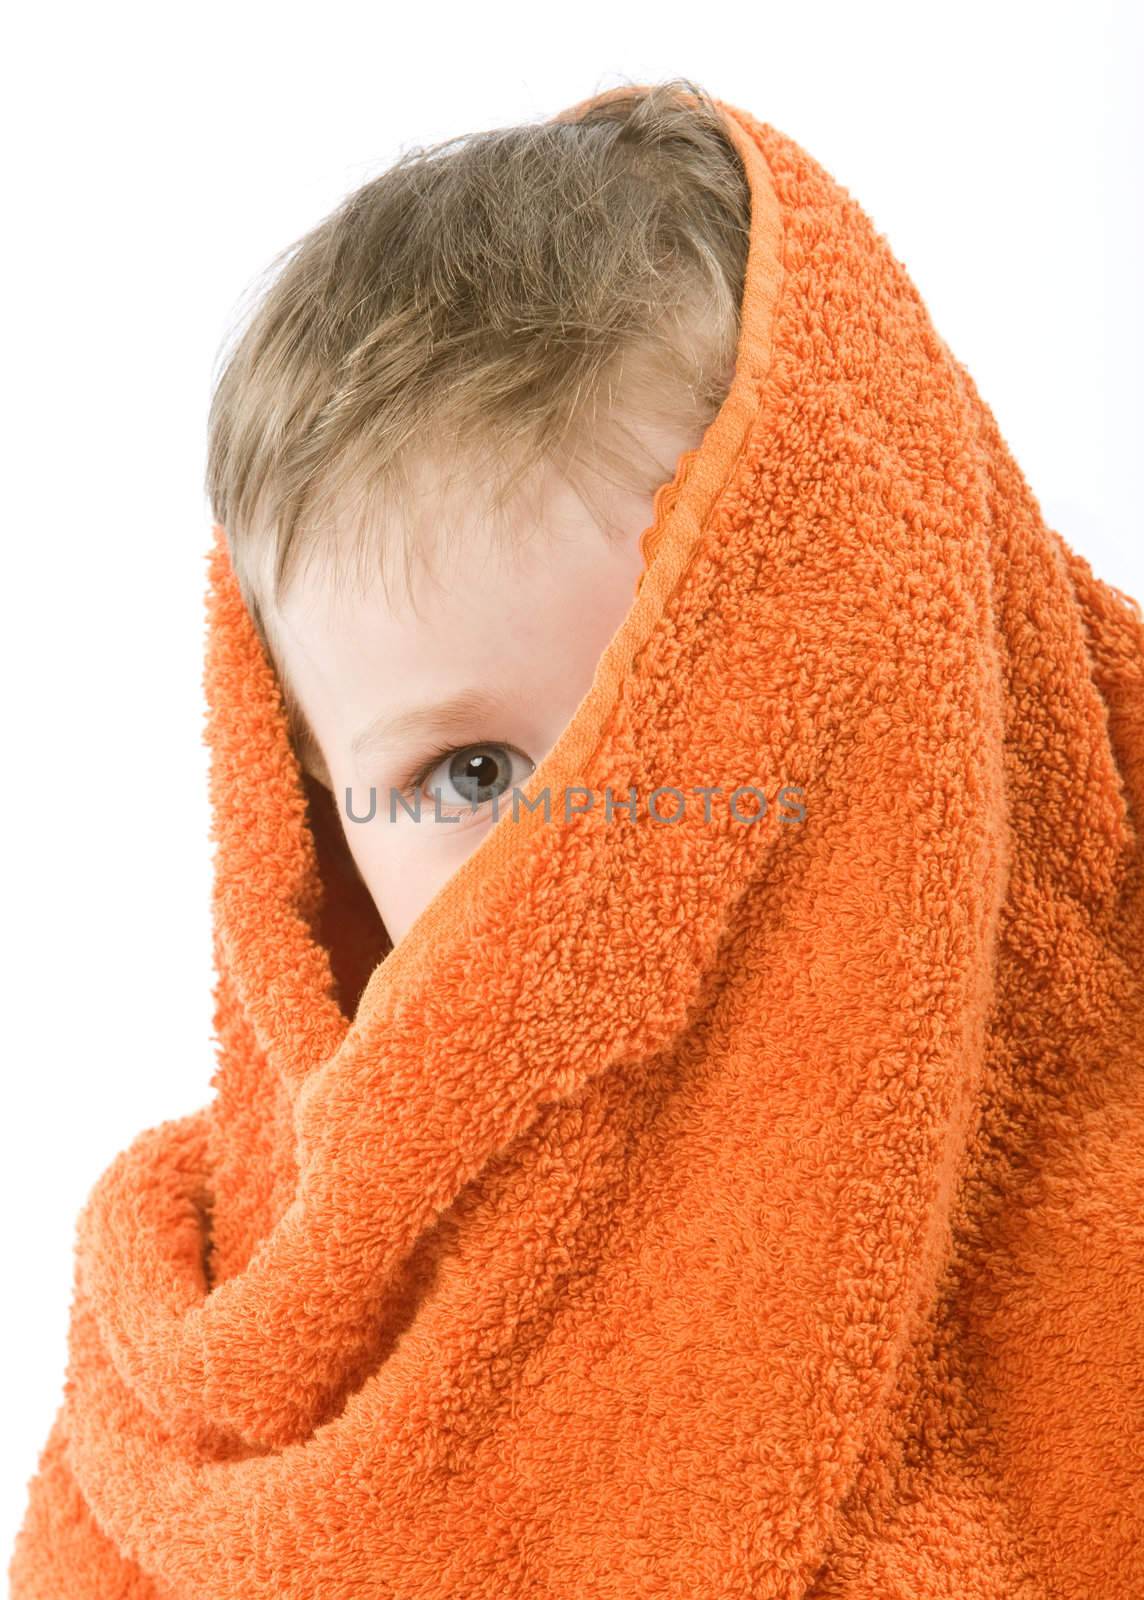 Child in orange towel. Half face hooded